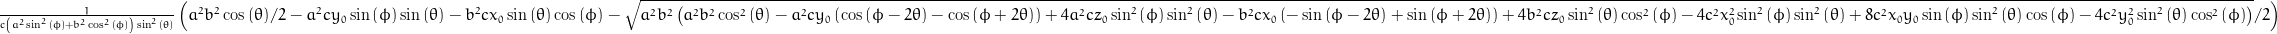 \frac{1}{c \left(a^{2} \sin^{2}{\left (\phi \right )} + b^{2} \cos^{2}{\left (\phi \right )}\right) \sin^{2}{\left (\theta \right )}} \left(\frac{a^{2} b^{2}}{2} \cos{\left (\theta \right )} - a^{2} c y_{0} \sin{\left (\phi \right )} \sin{\left (\theta \right )} - b^{2} c x_{0} \sin{\left (\theta \right )} \cos{\left (\phi \right )} - \frac{1}{2} \sqrt{a^{2} b^{2} \left(a^{2} b^{2} \cos^{2}{\left (\theta \right )} - a^{2} c y_{0} \left(\cos{\left (\phi - 2 \theta \right )} - \cos{\left (\phi + 2 \theta \right )}\right) + 4 a^{2} c z_{0} \sin^{2}{\left (\phi \right )} \sin^{2}{\left (\theta \right )} - b^{2} c x_{0} \left(- \sin{\left (\phi - 2 \theta \right )} + \sin{\left (\phi + 2 \theta \right )}\right) + 4 b^{2} c z_{0} \sin^{2}{\left (\theta \right )} \cos^{2}{\left (\phi \right )} - 4 c^{2} x_{0}^{2} \sin^{2}{\left (\phi \right )} \sin^{2}{\left (\theta \right )} + 8 c^{2} x_{0} y_{0} \sin{\left (\phi \right )} \sin^{2}{\left (\theta \right )} \cos{\left (\phi \right )} - 4 c^{2} y_{0}^{2} \sin^{2}{\left (\theta \right )} \cos^{2}{\left (\phi \right )}\right)}\right)